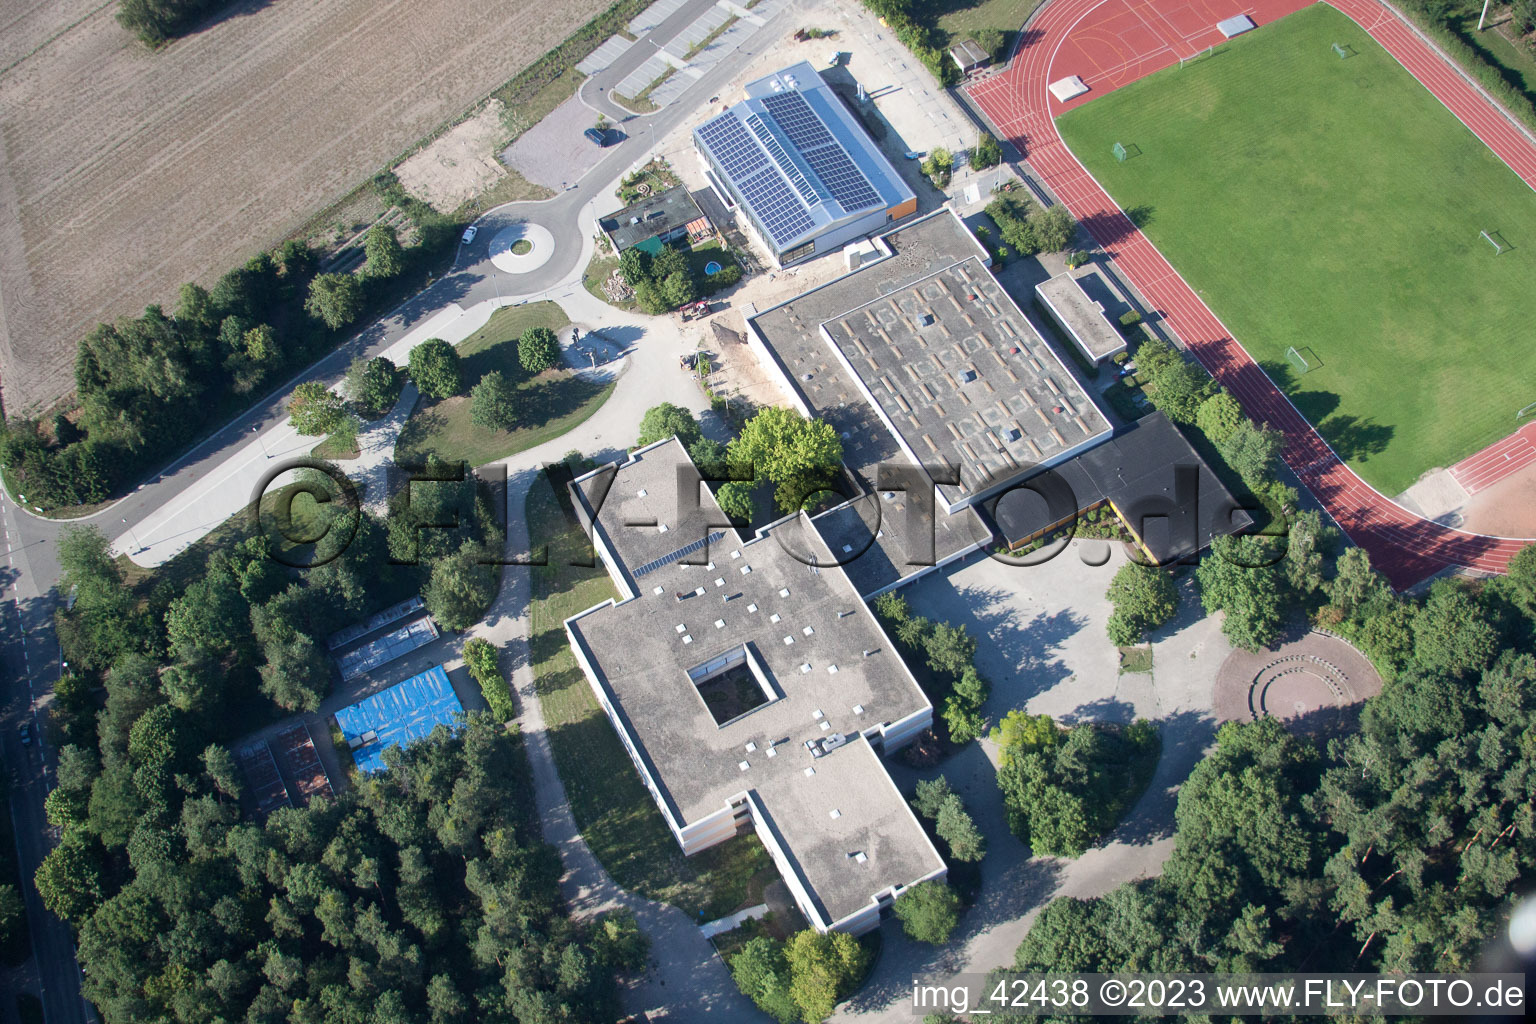 Drone image of Roman bath school in Rheinzabern in the state Rhineland-Palatinate, Germany